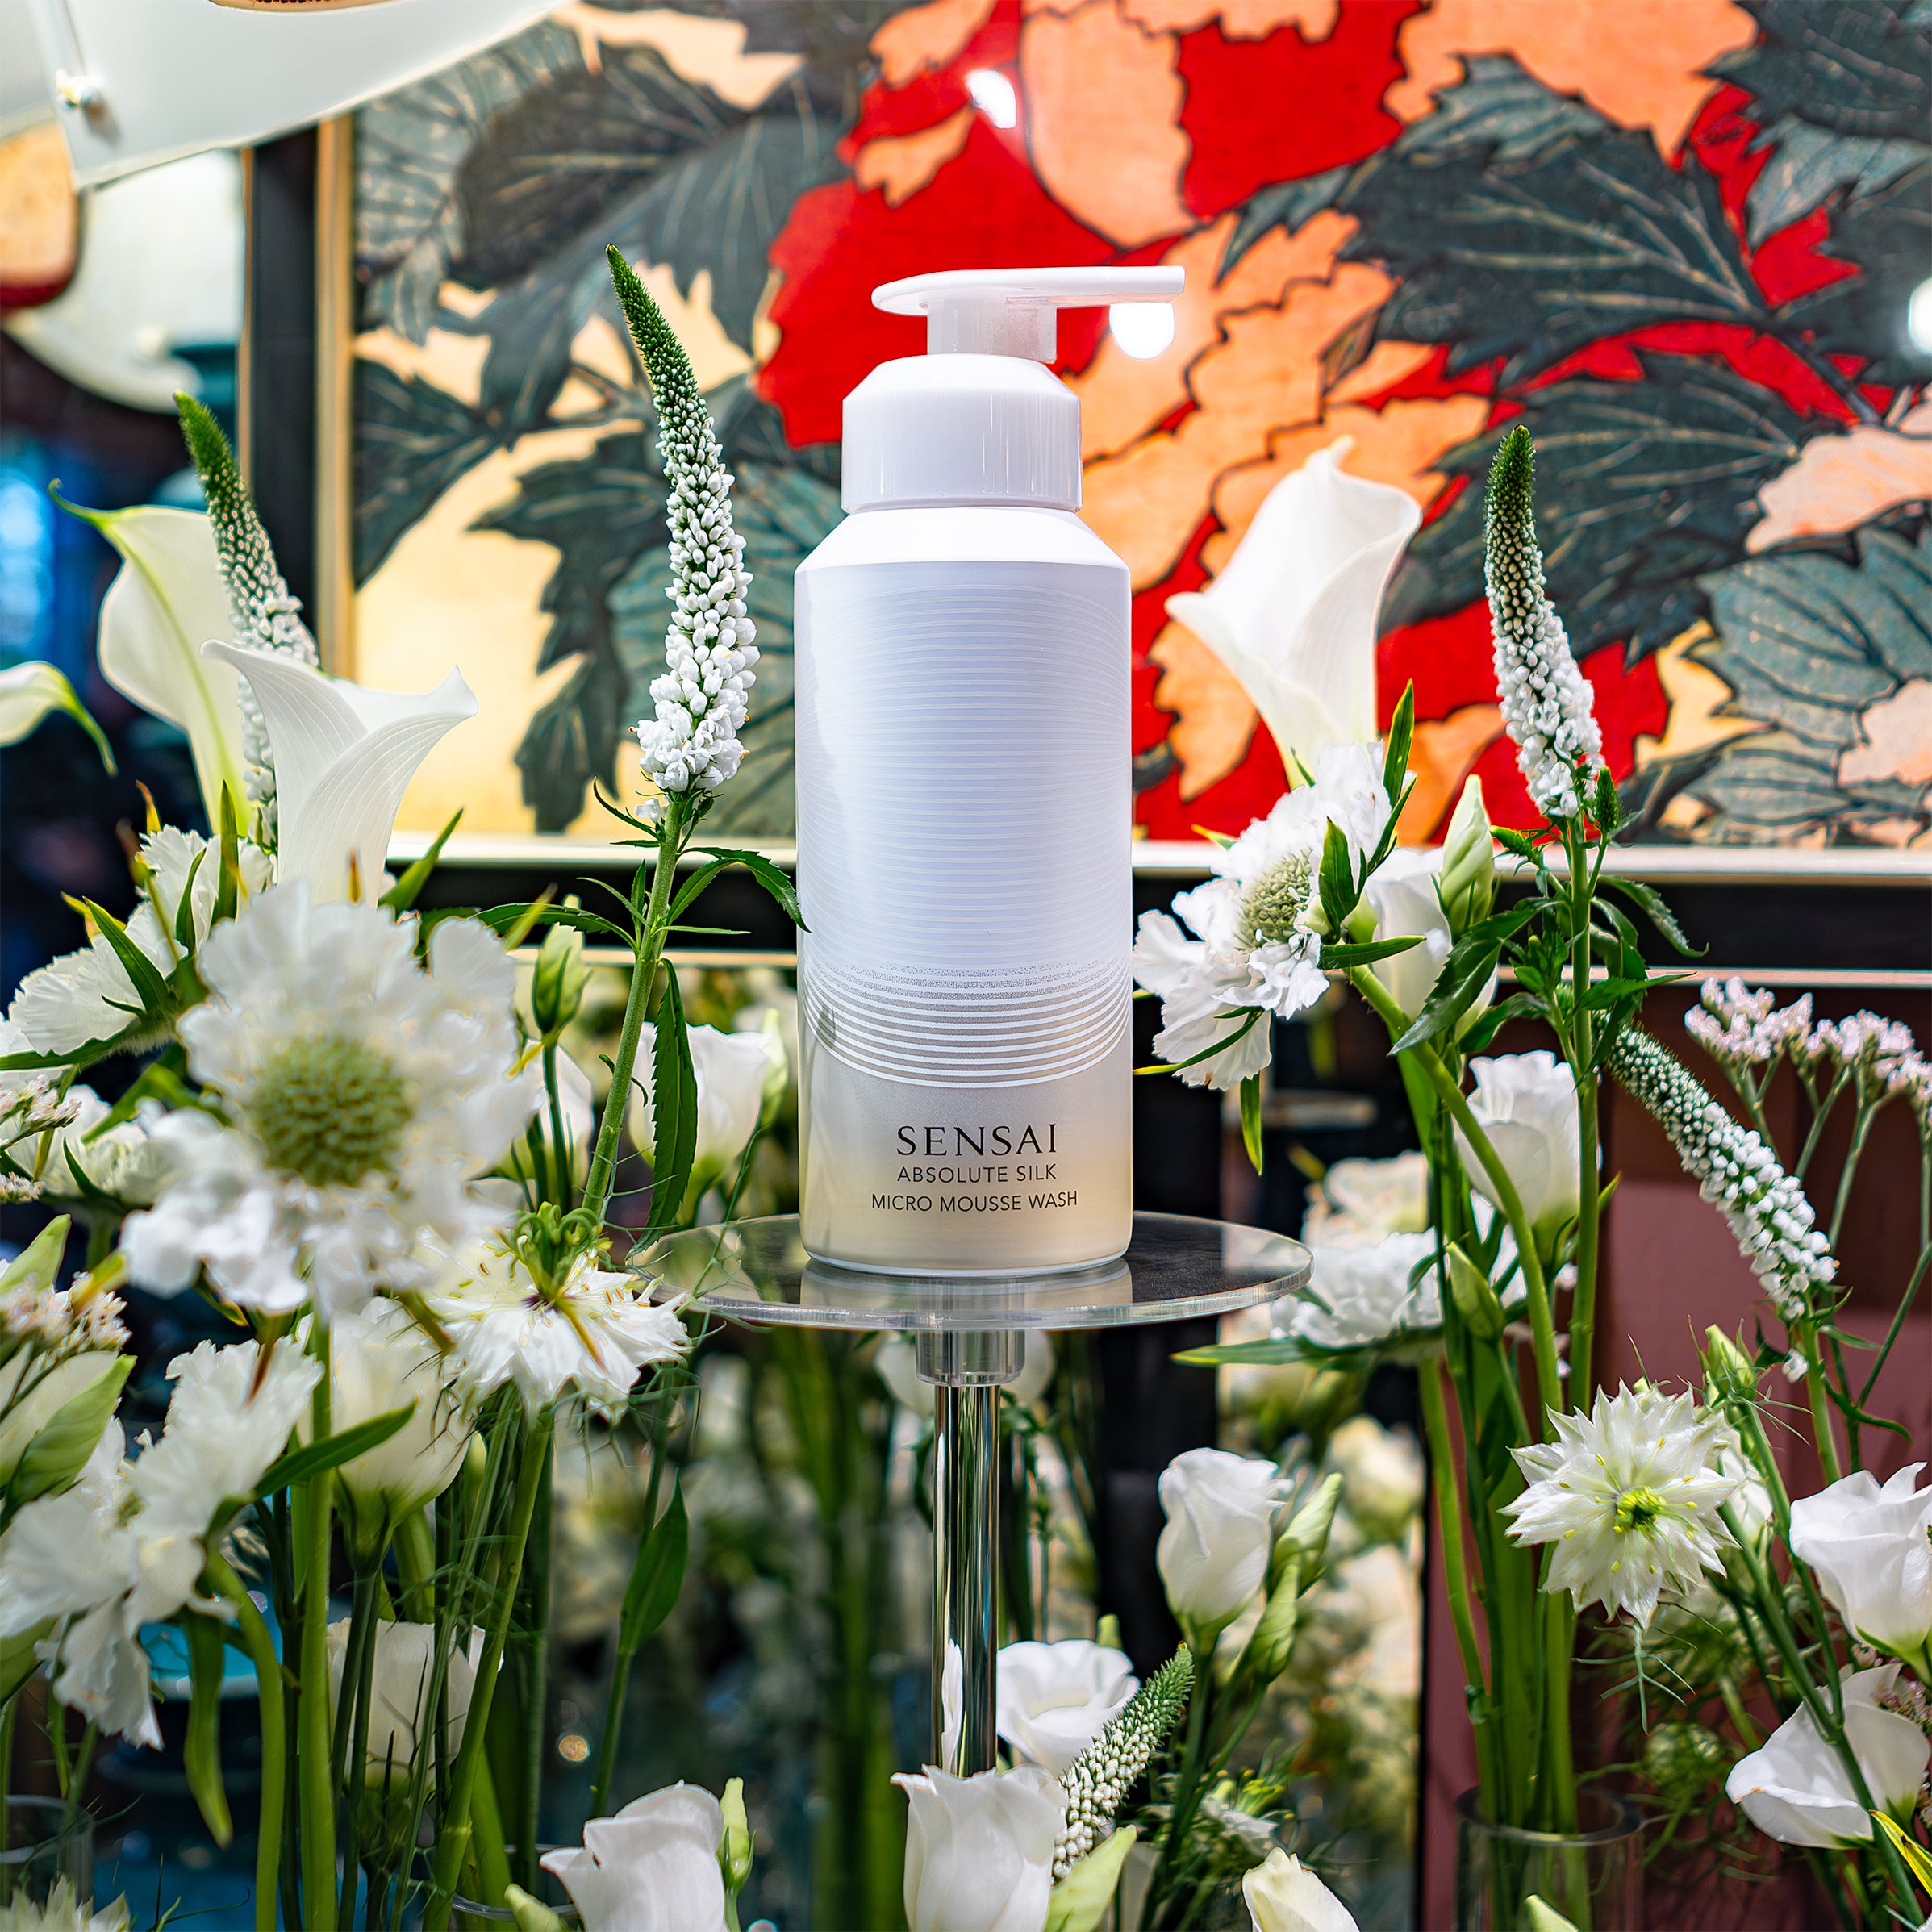 Image showcasing Sensai Absolute Silk Micro Mousse Wash amidst white flower arrangements designed by Amarante London for the product launch.